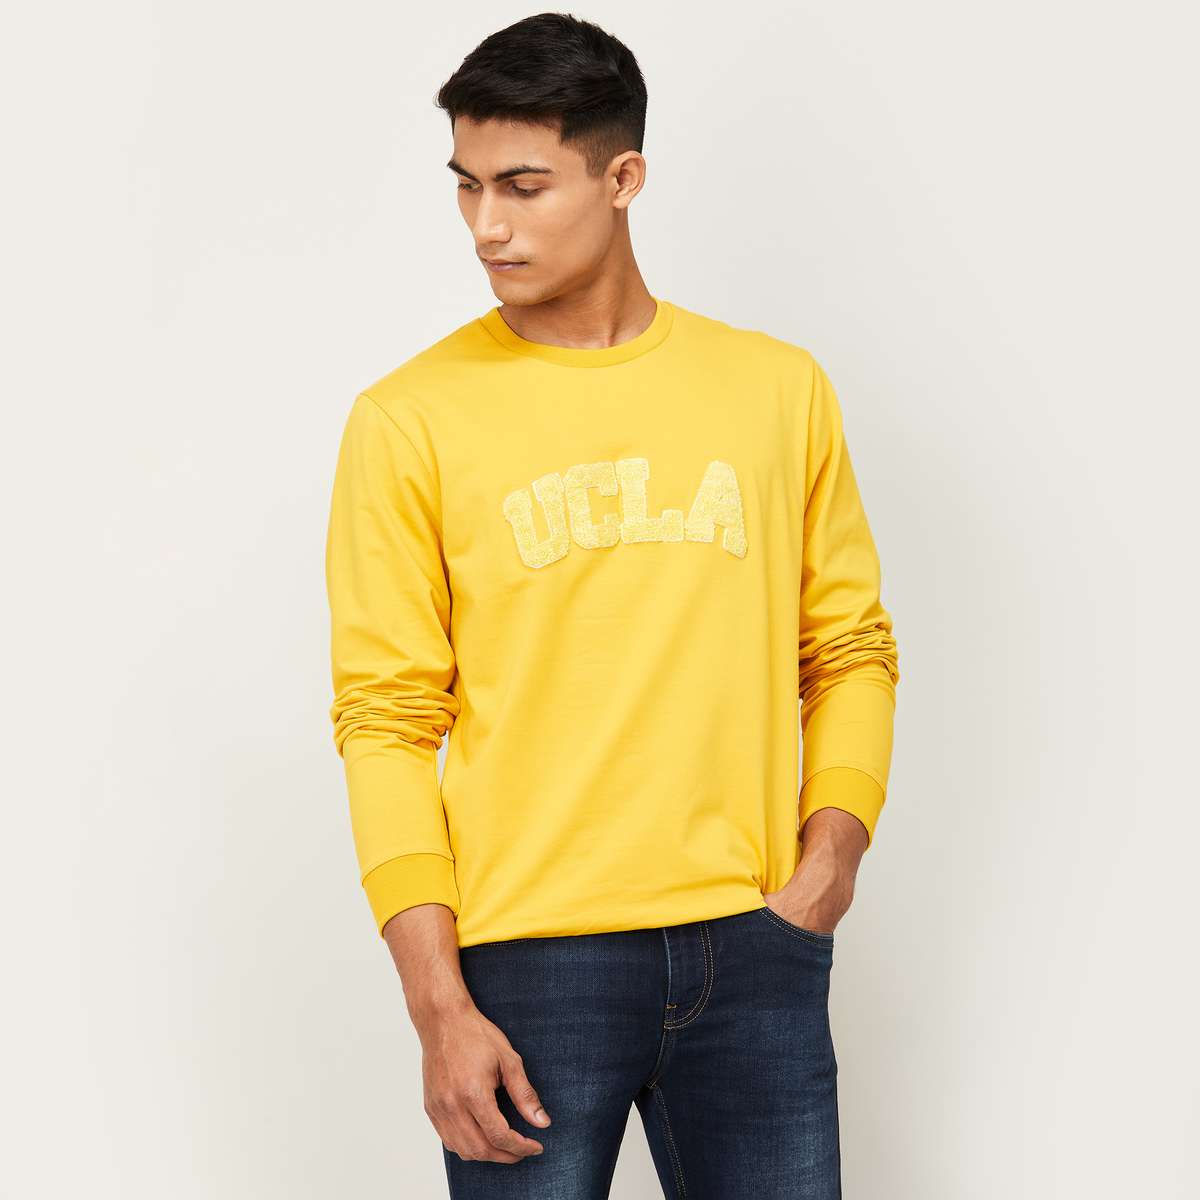 8.UCLA Men Applique Detail Full Sleeves Sweatshirt